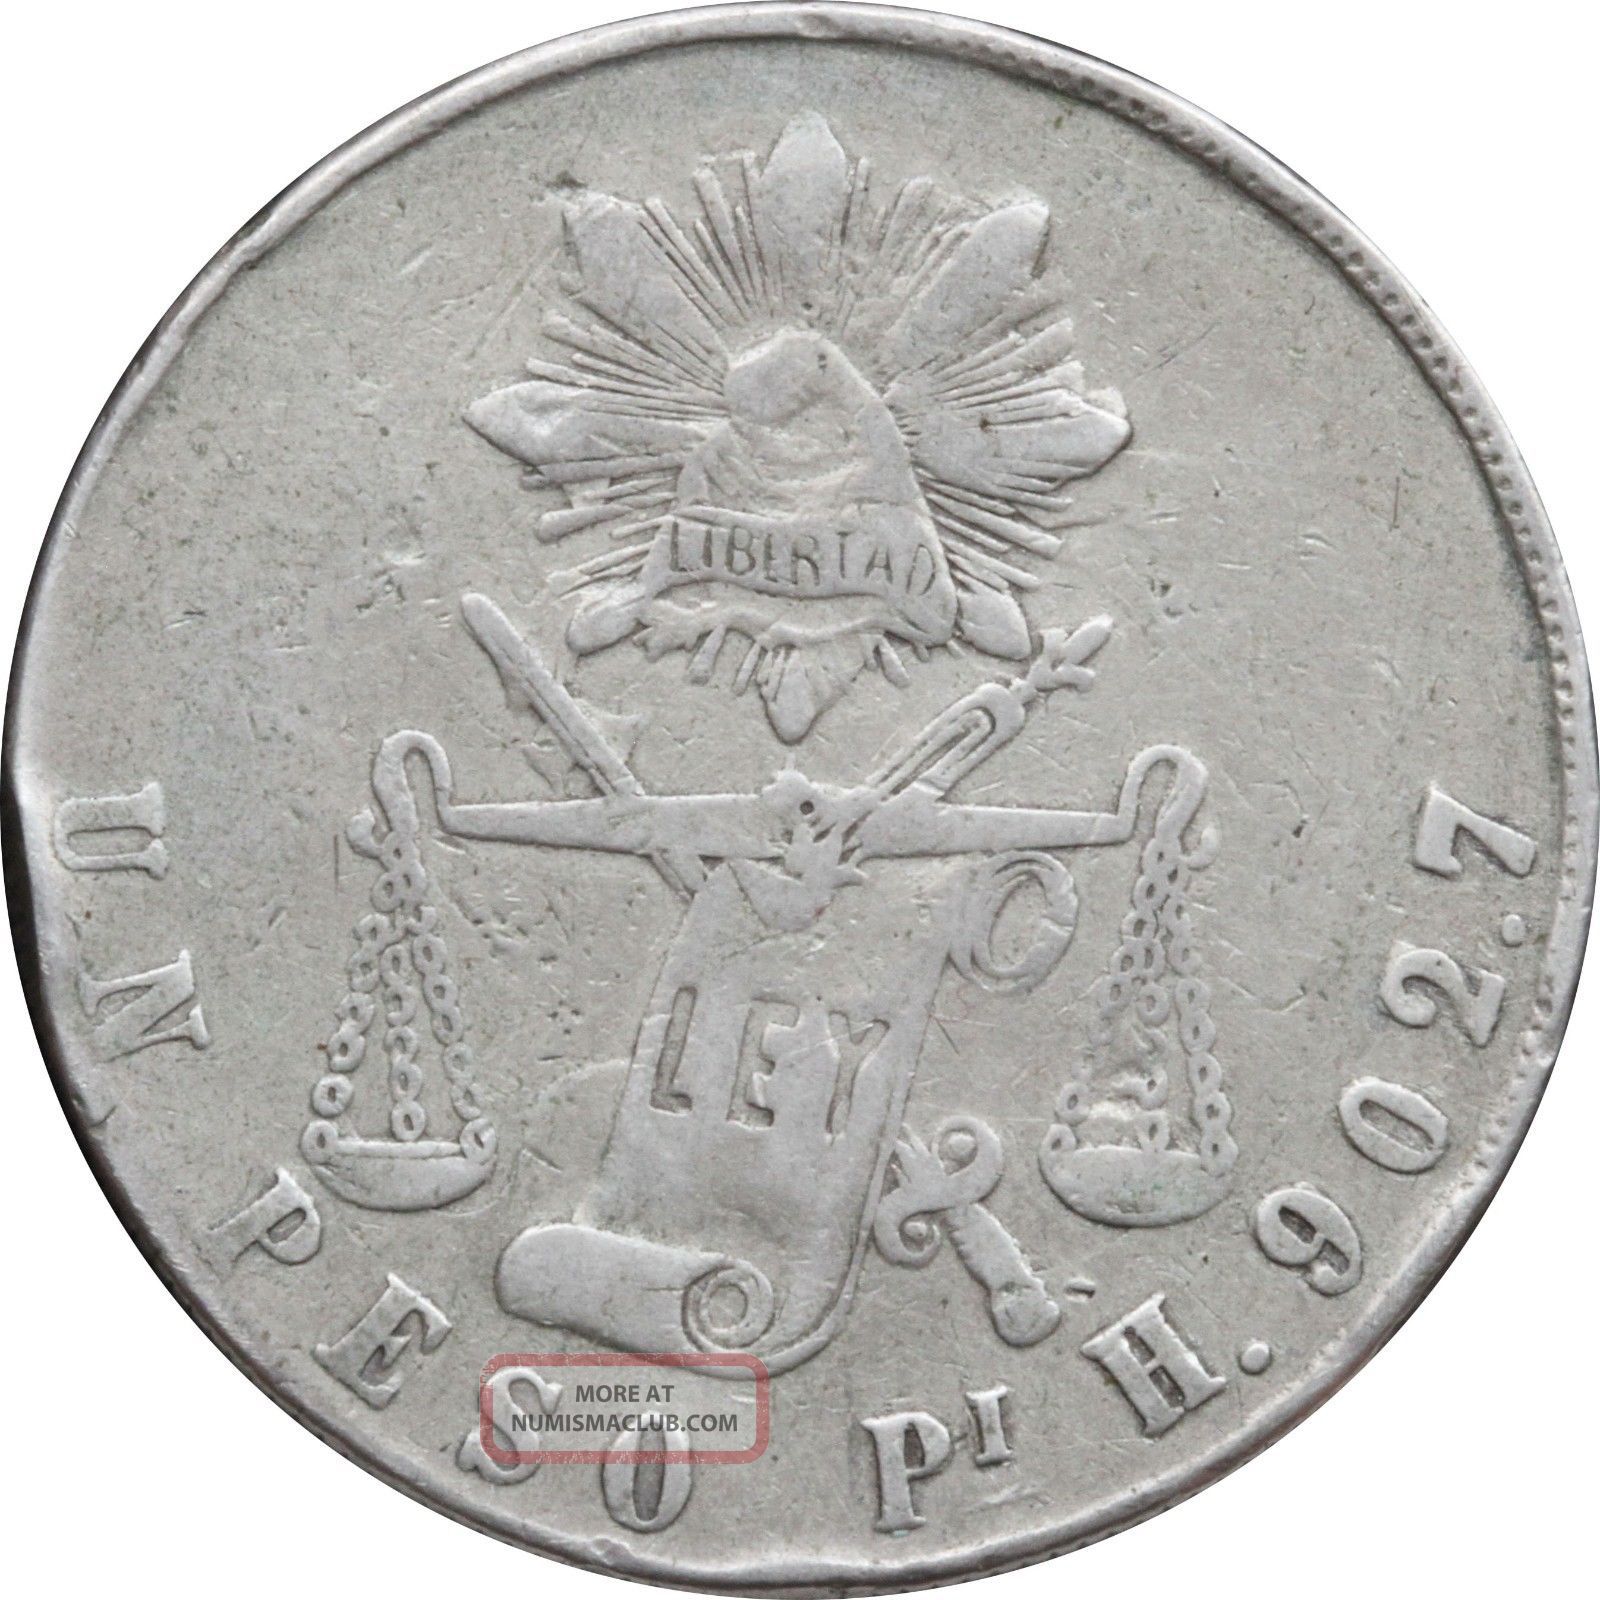 Mexico 1 Peso Pi 1873 H Potosi, Balance Scale.